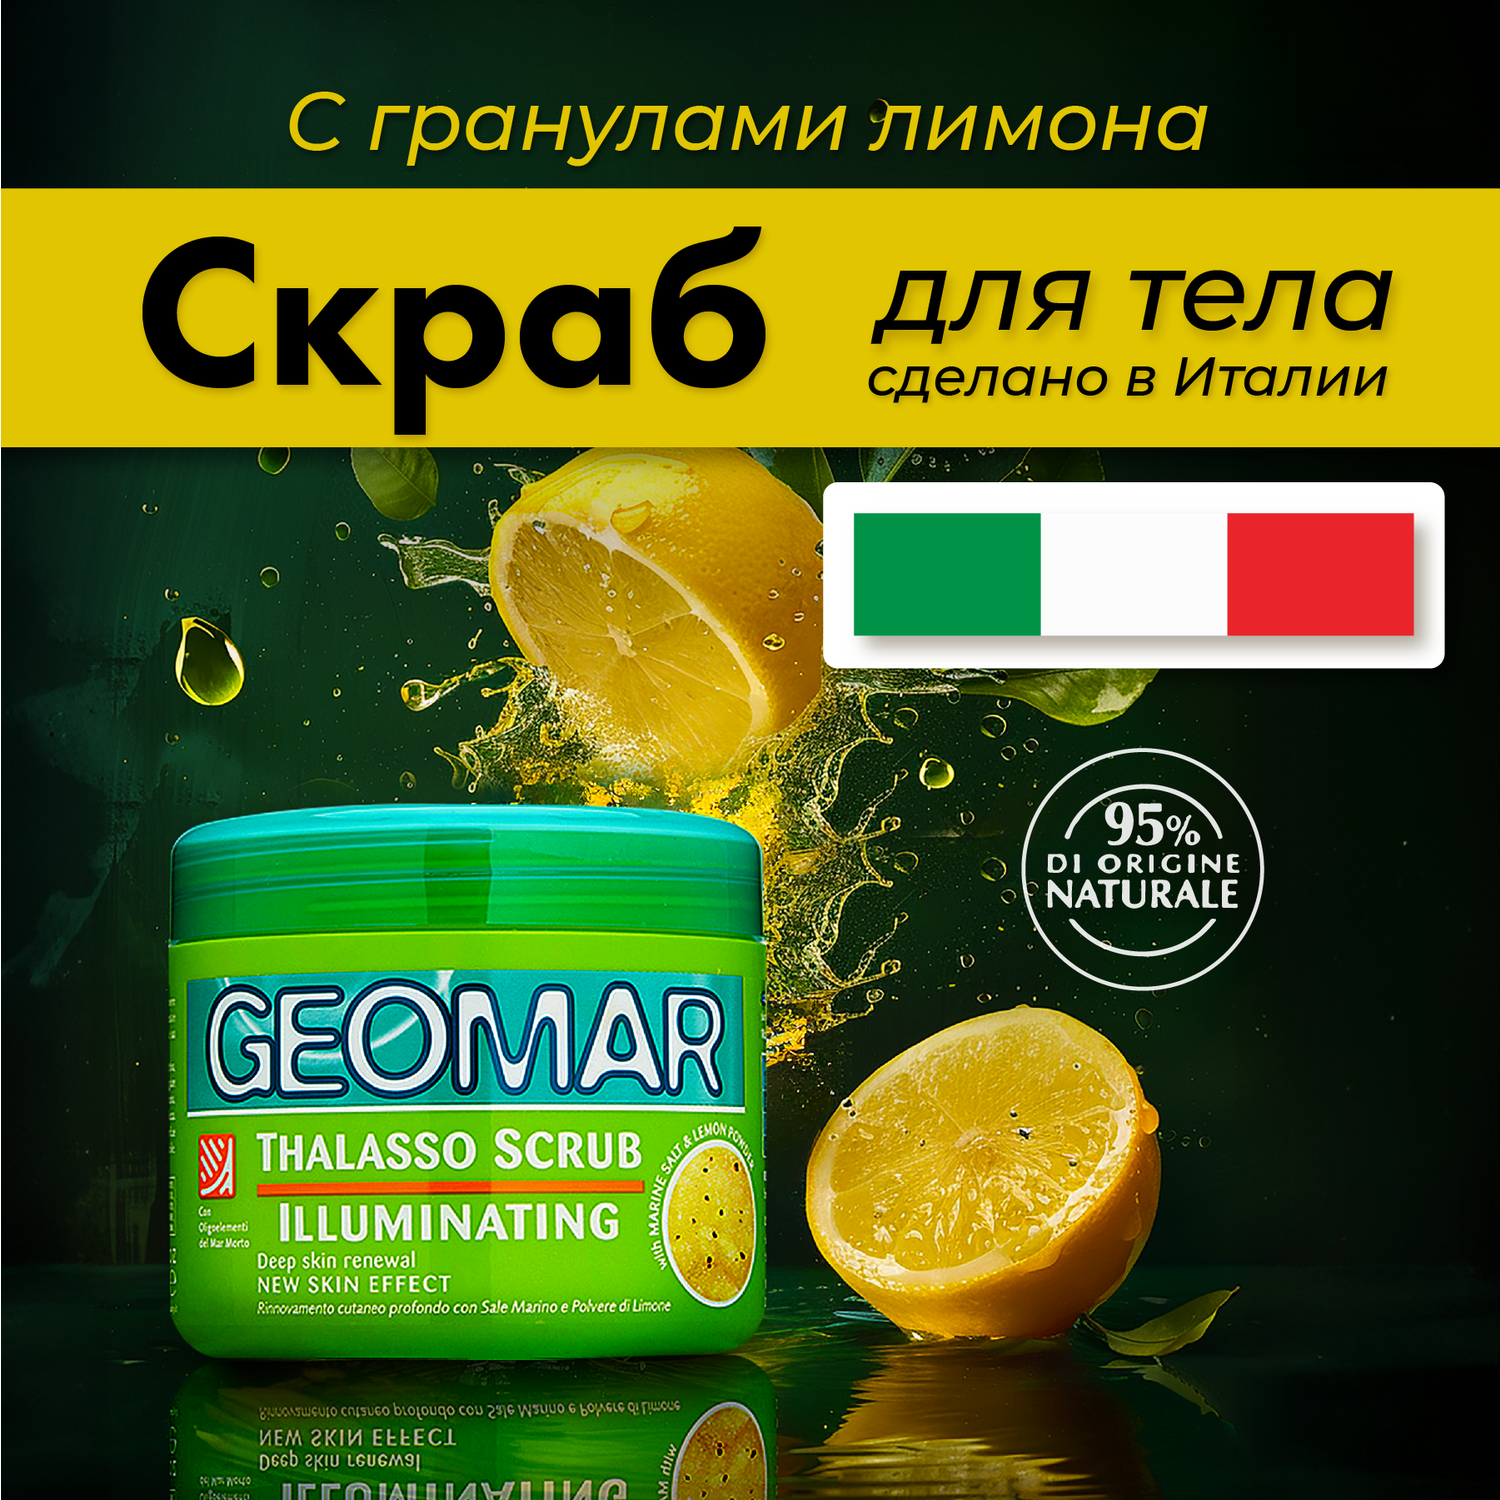 Скраб для тела GEOMAR Талассо с гранулами лимона 600 г - фото 1